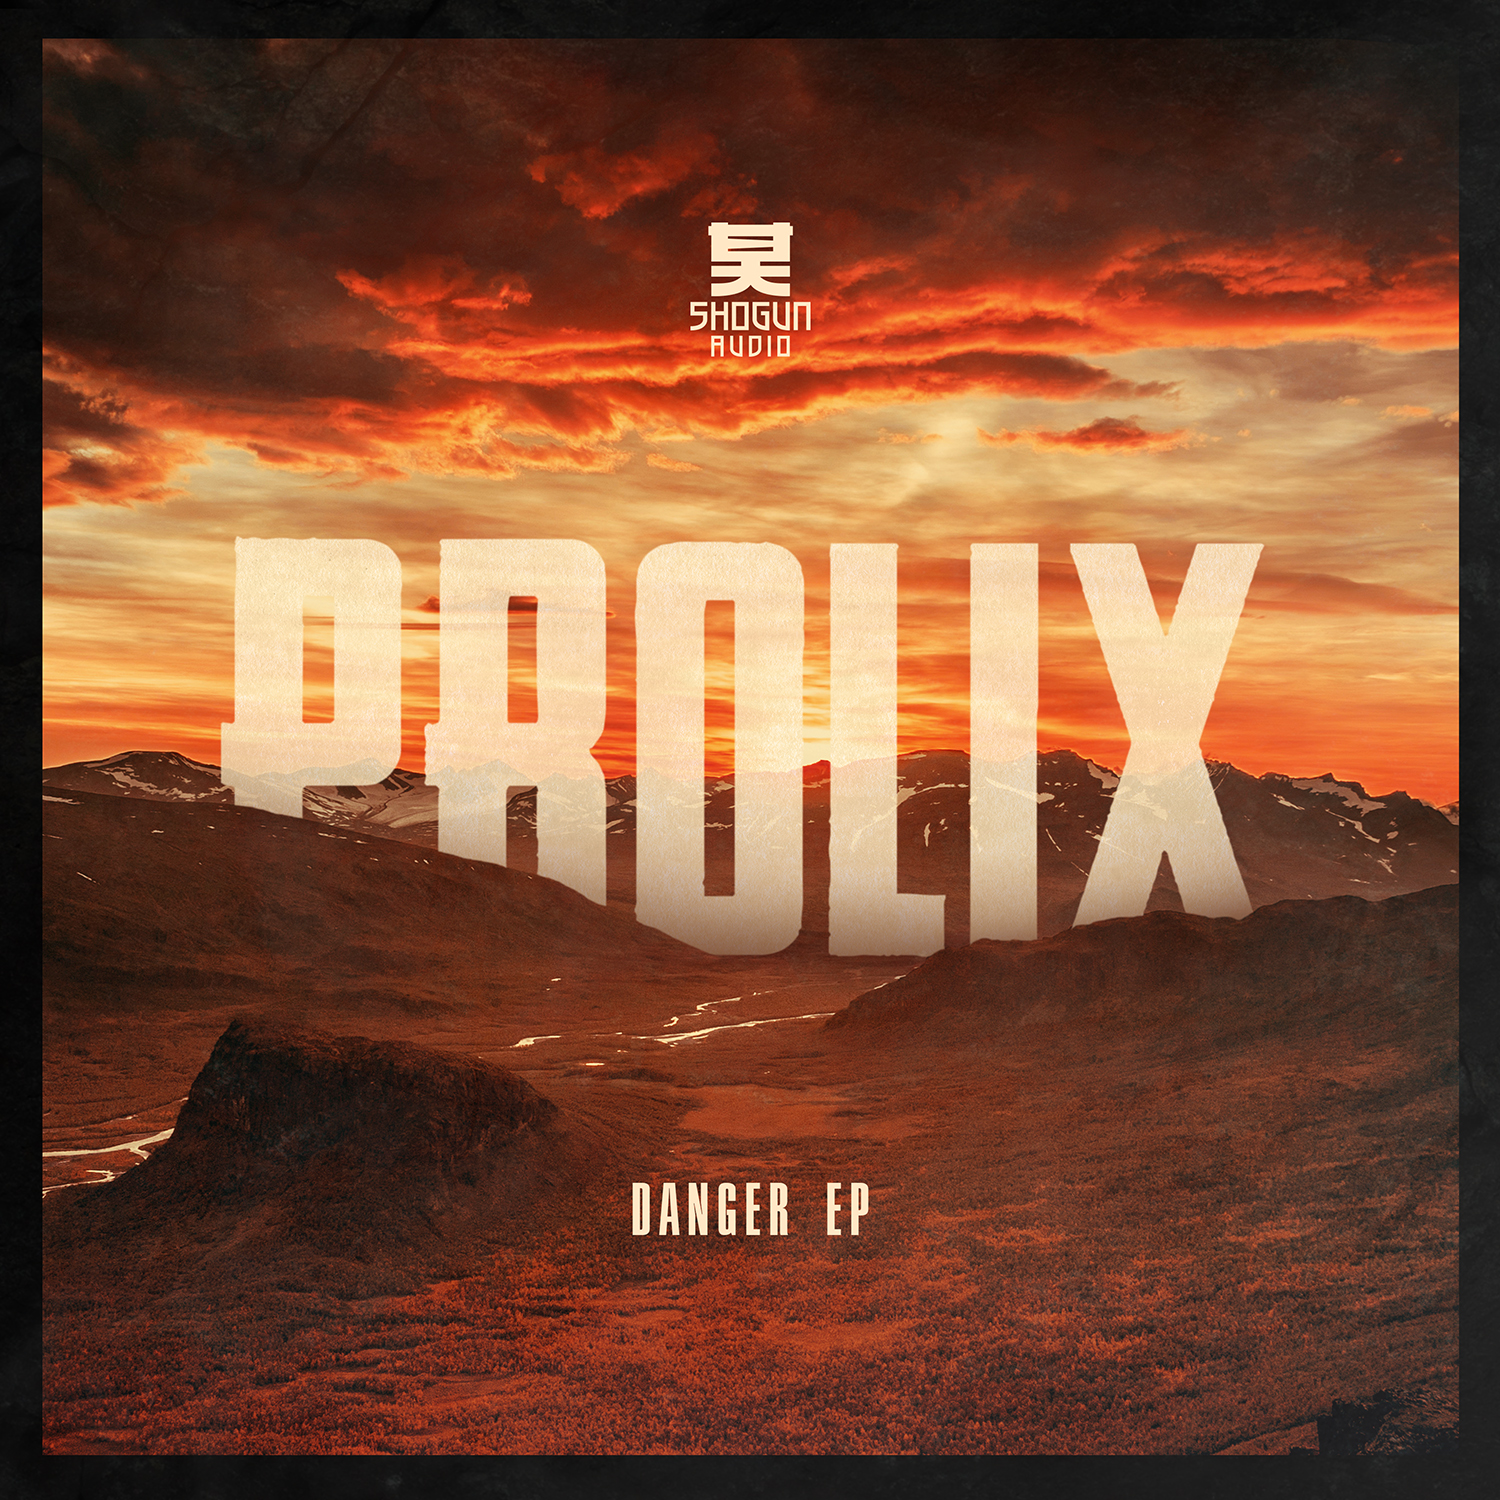 Prolix/DANGER EP 12"